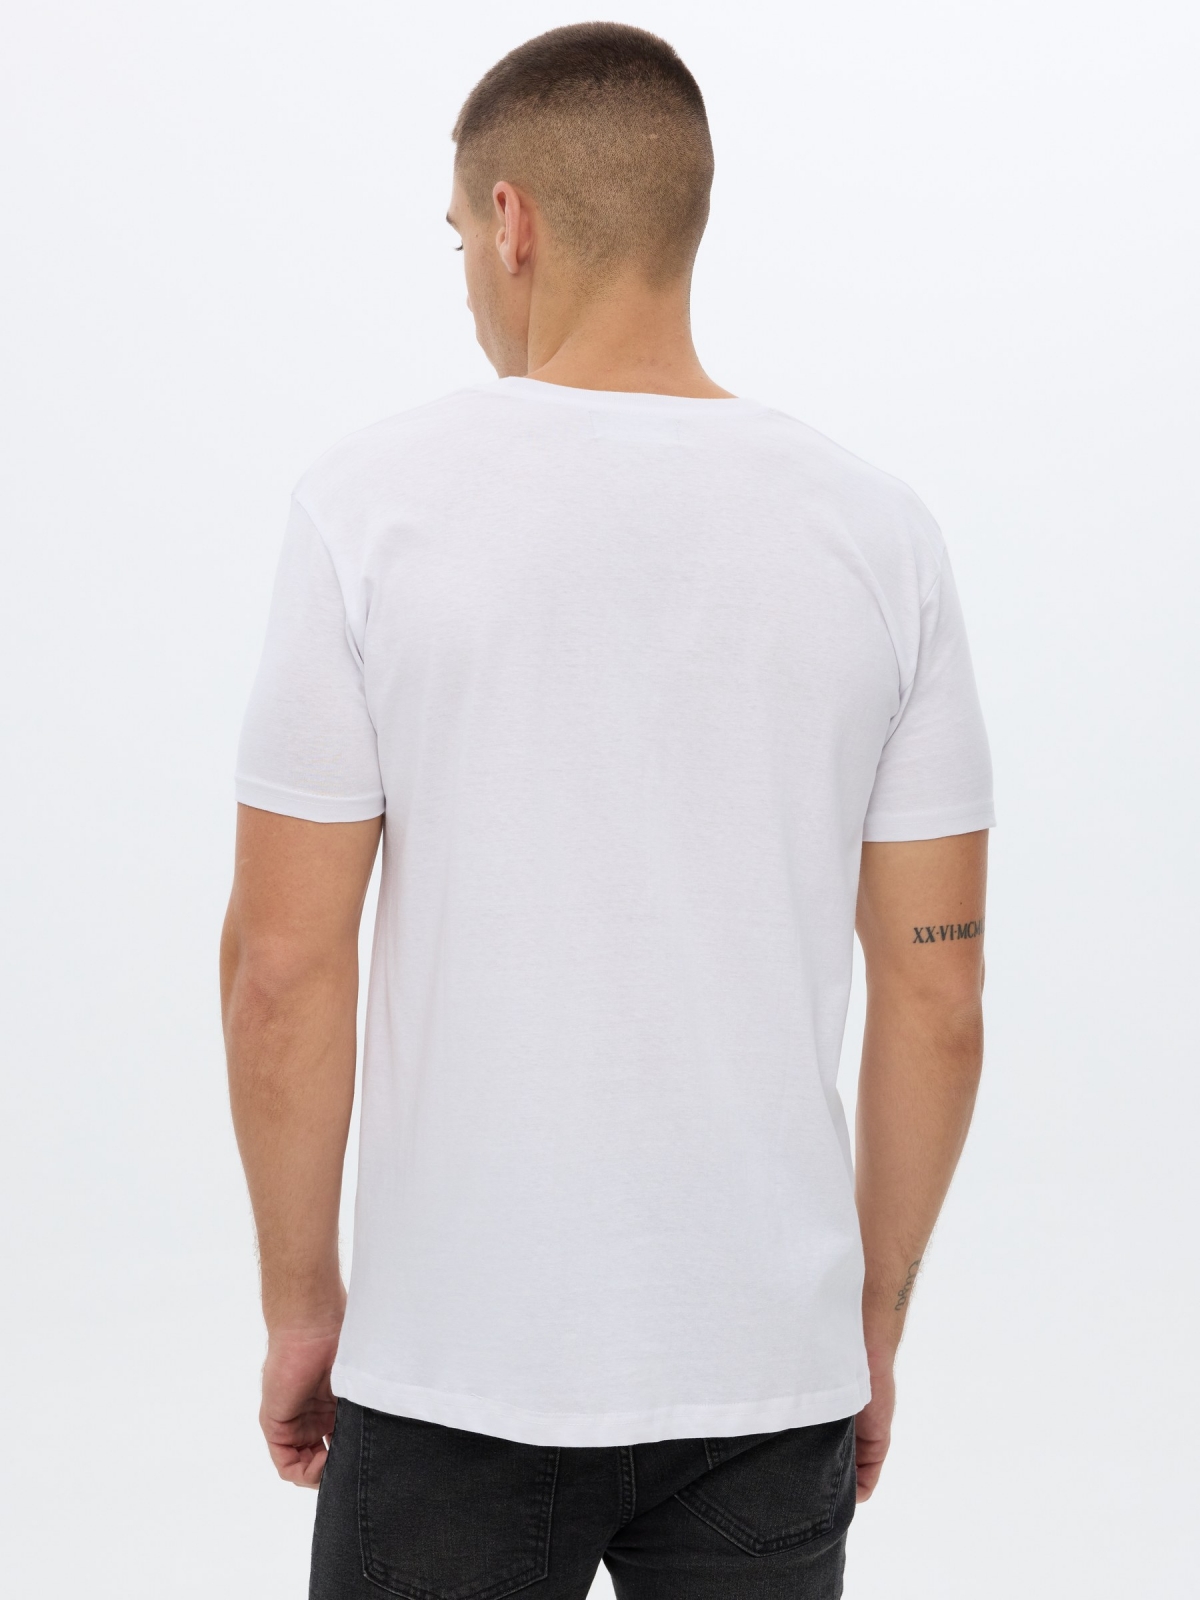 Camiseta Create Yourself blanco vista media trasera